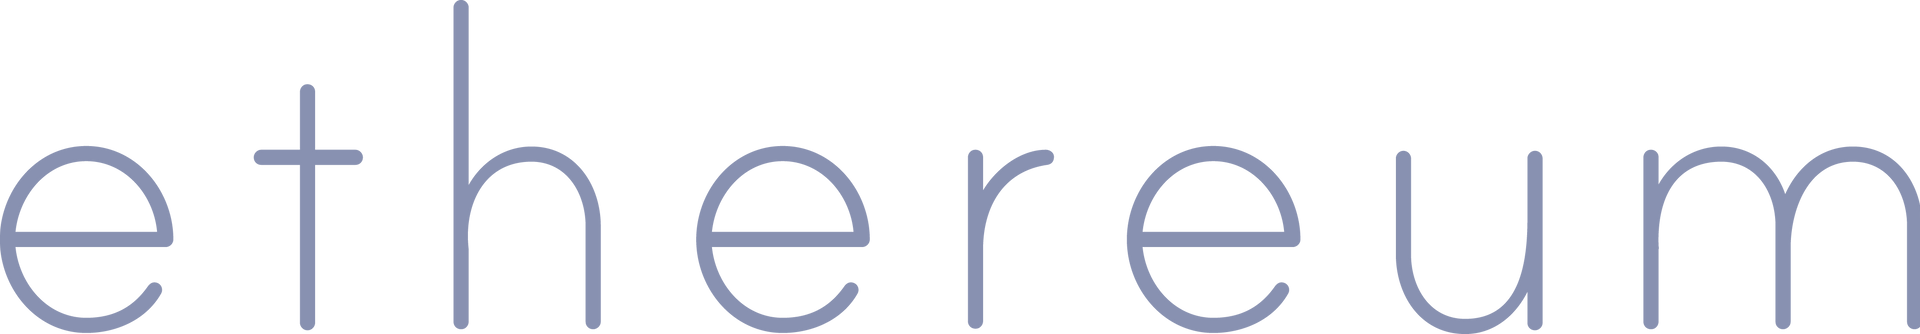 Mot-symbole ETH (violet)